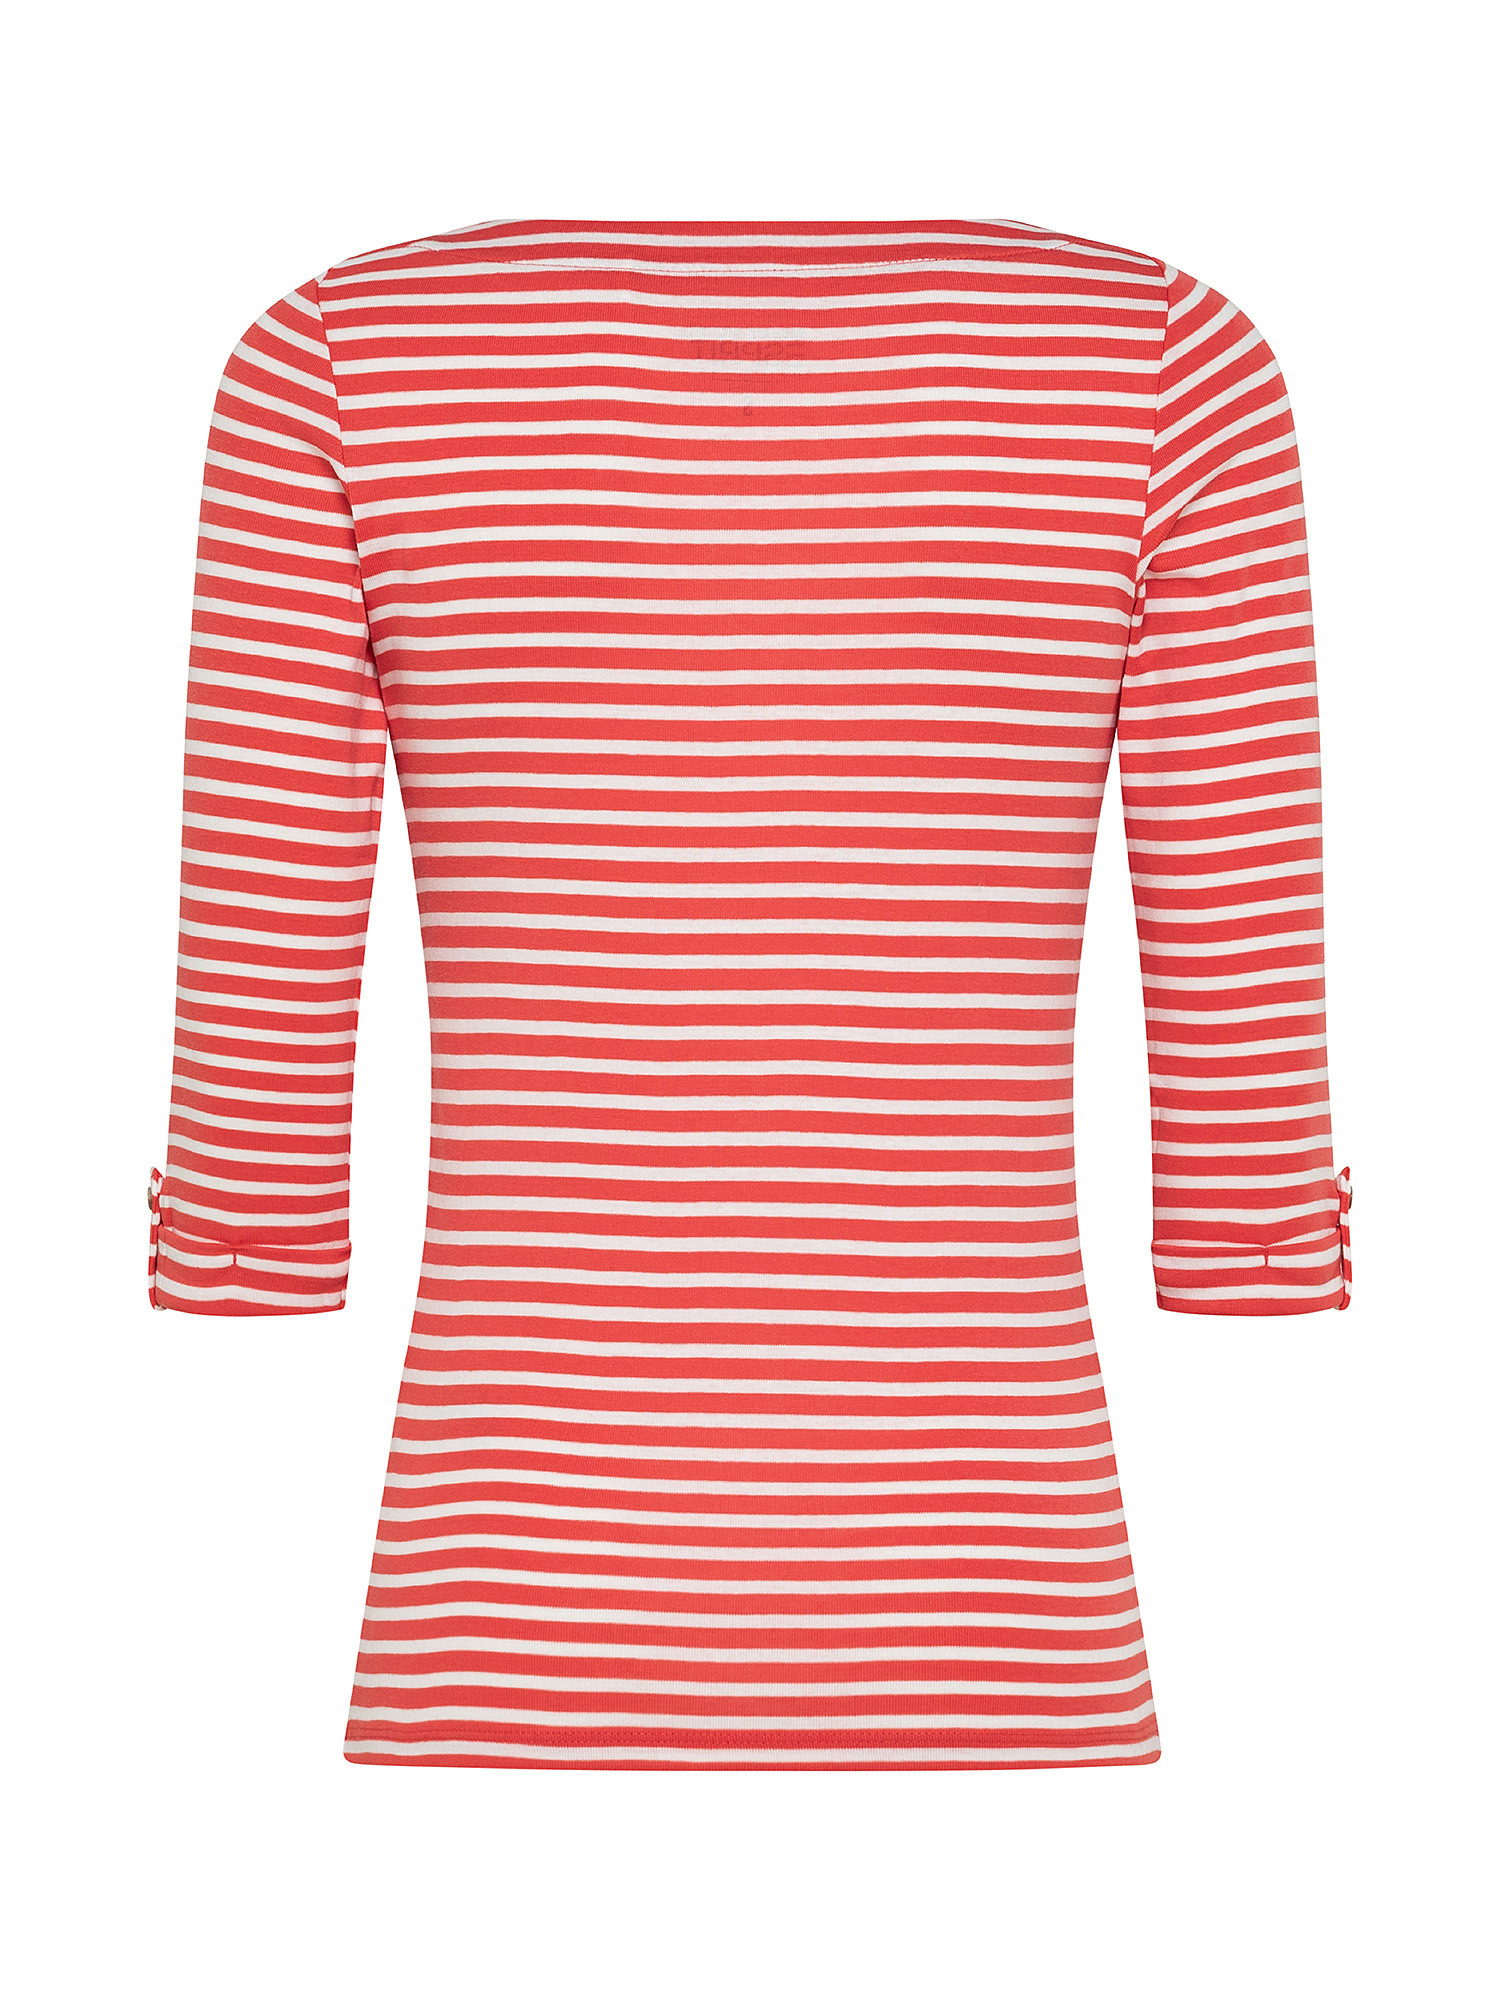 Striped T-shirt, Orange, large image number 1